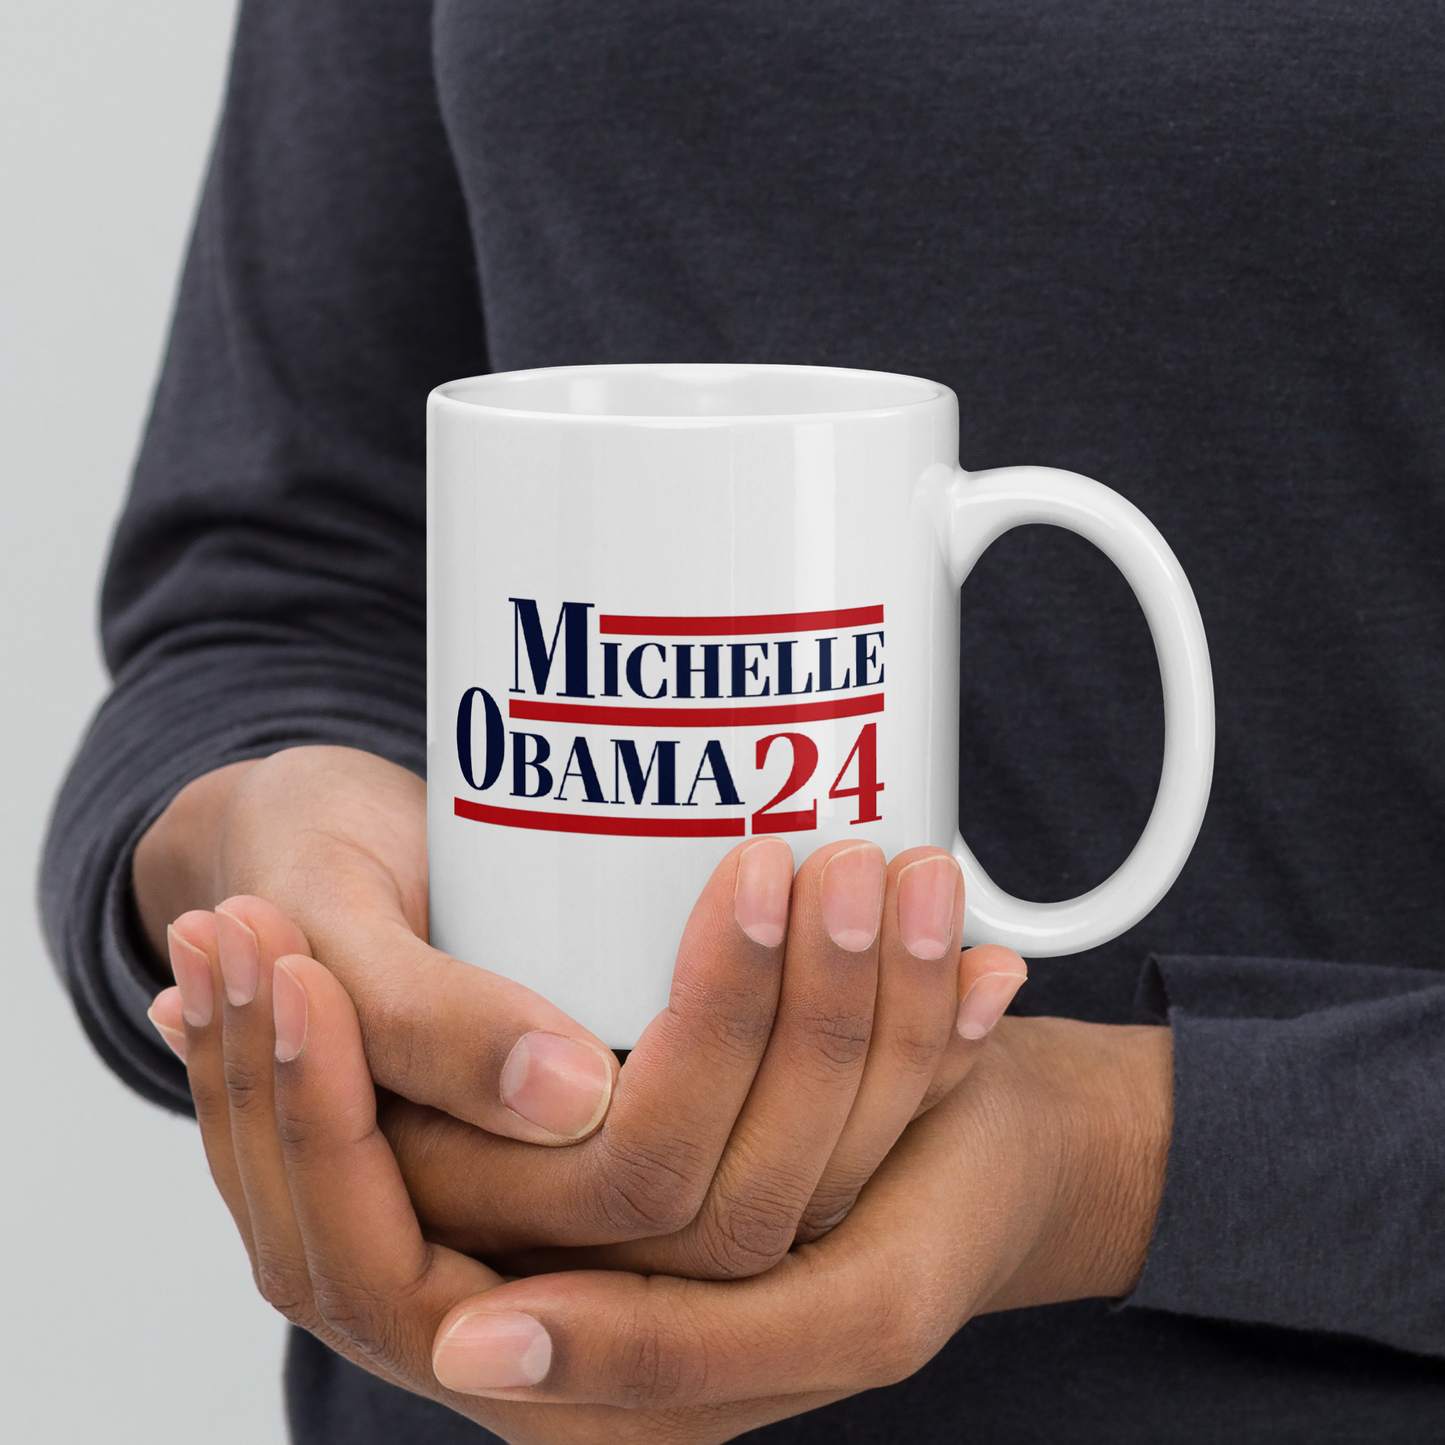 Michelle Obama 2024 Mug